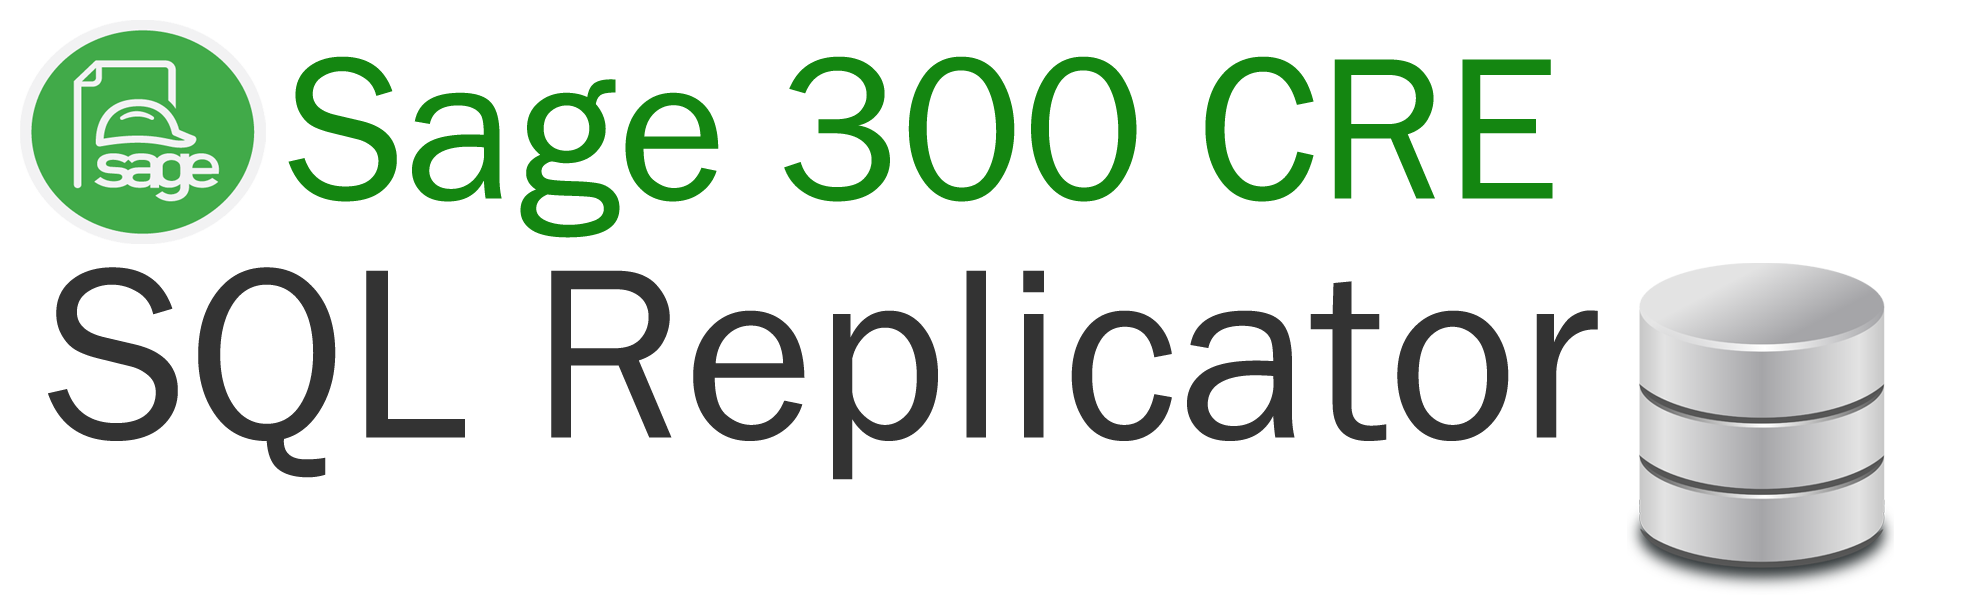 Sage 300 CRE SQL Replicator Logo